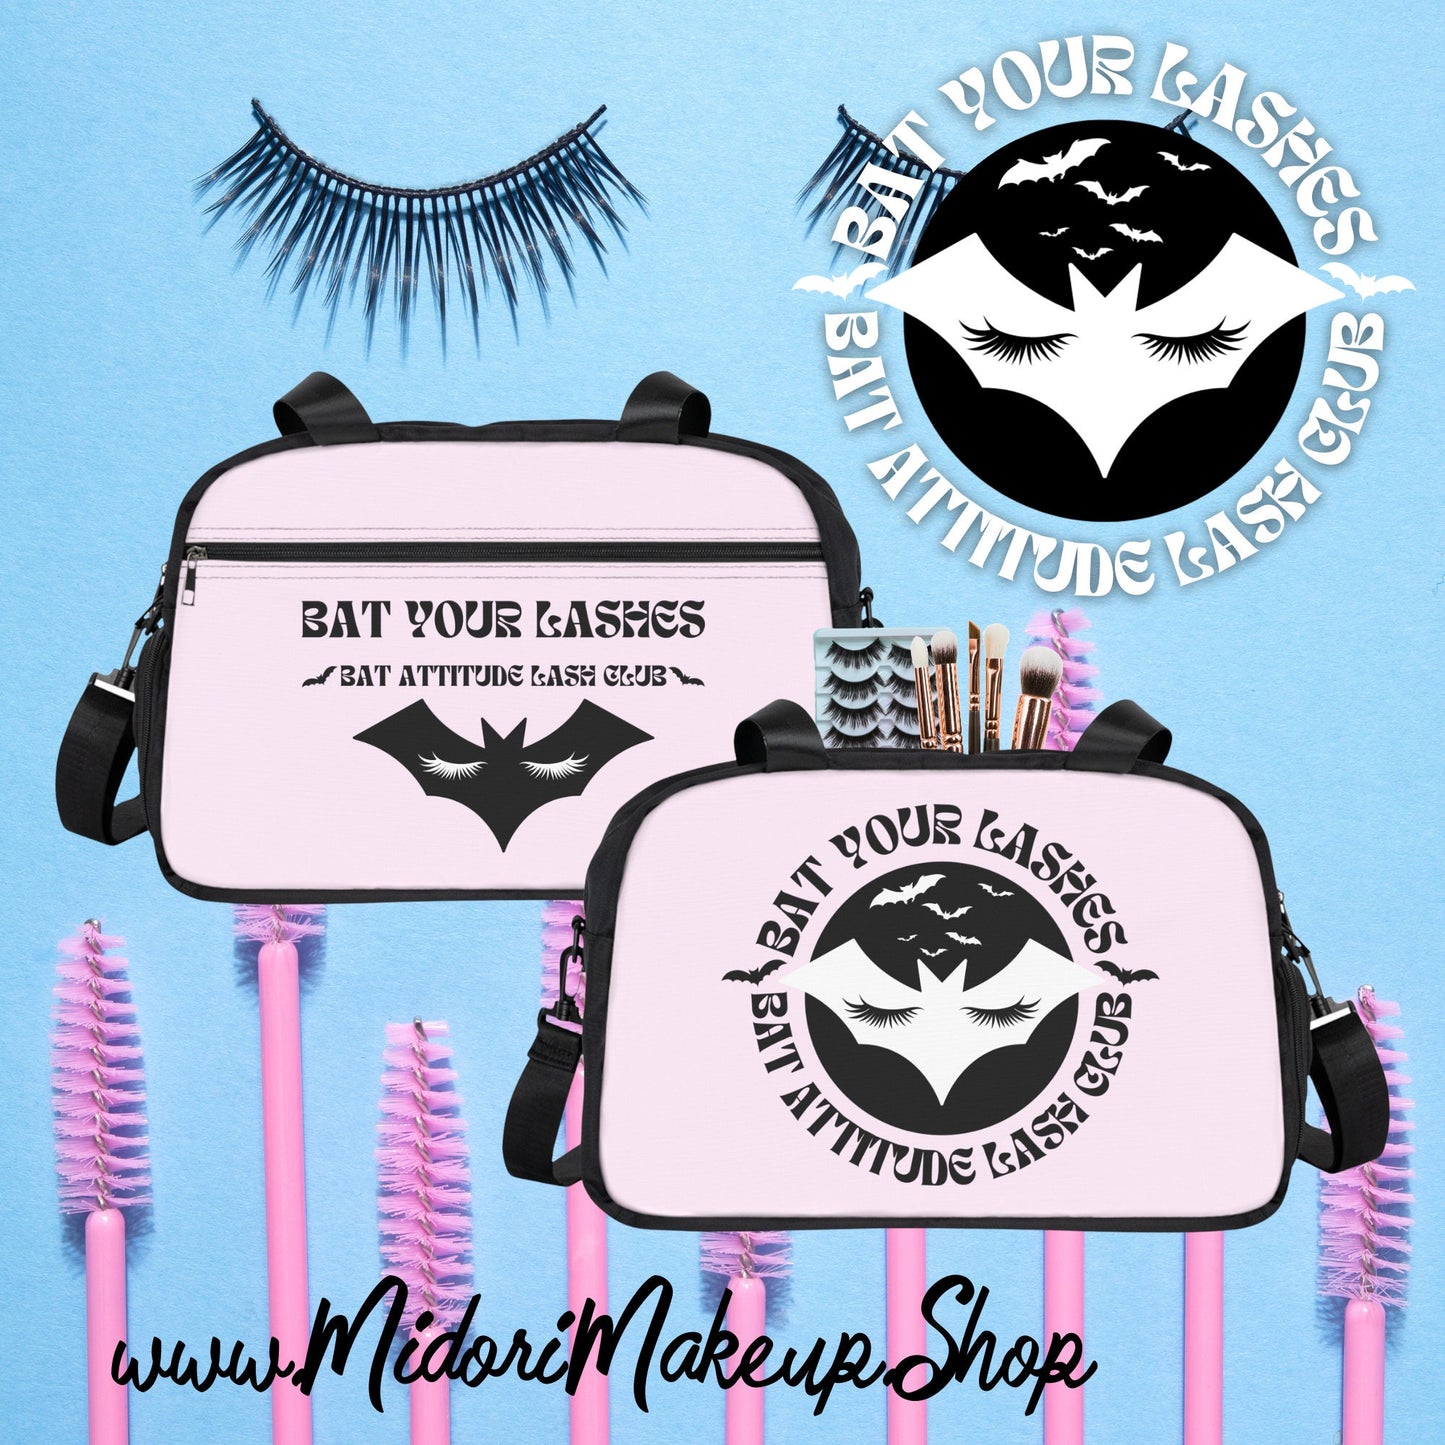 Spooky Cute Bats Bag - Lash Makeup Artist Organizer Case - Bat Your Lashes Bat Attitude Lash Club Gym Handbag Y2K Weekender Duffle MUA Gift